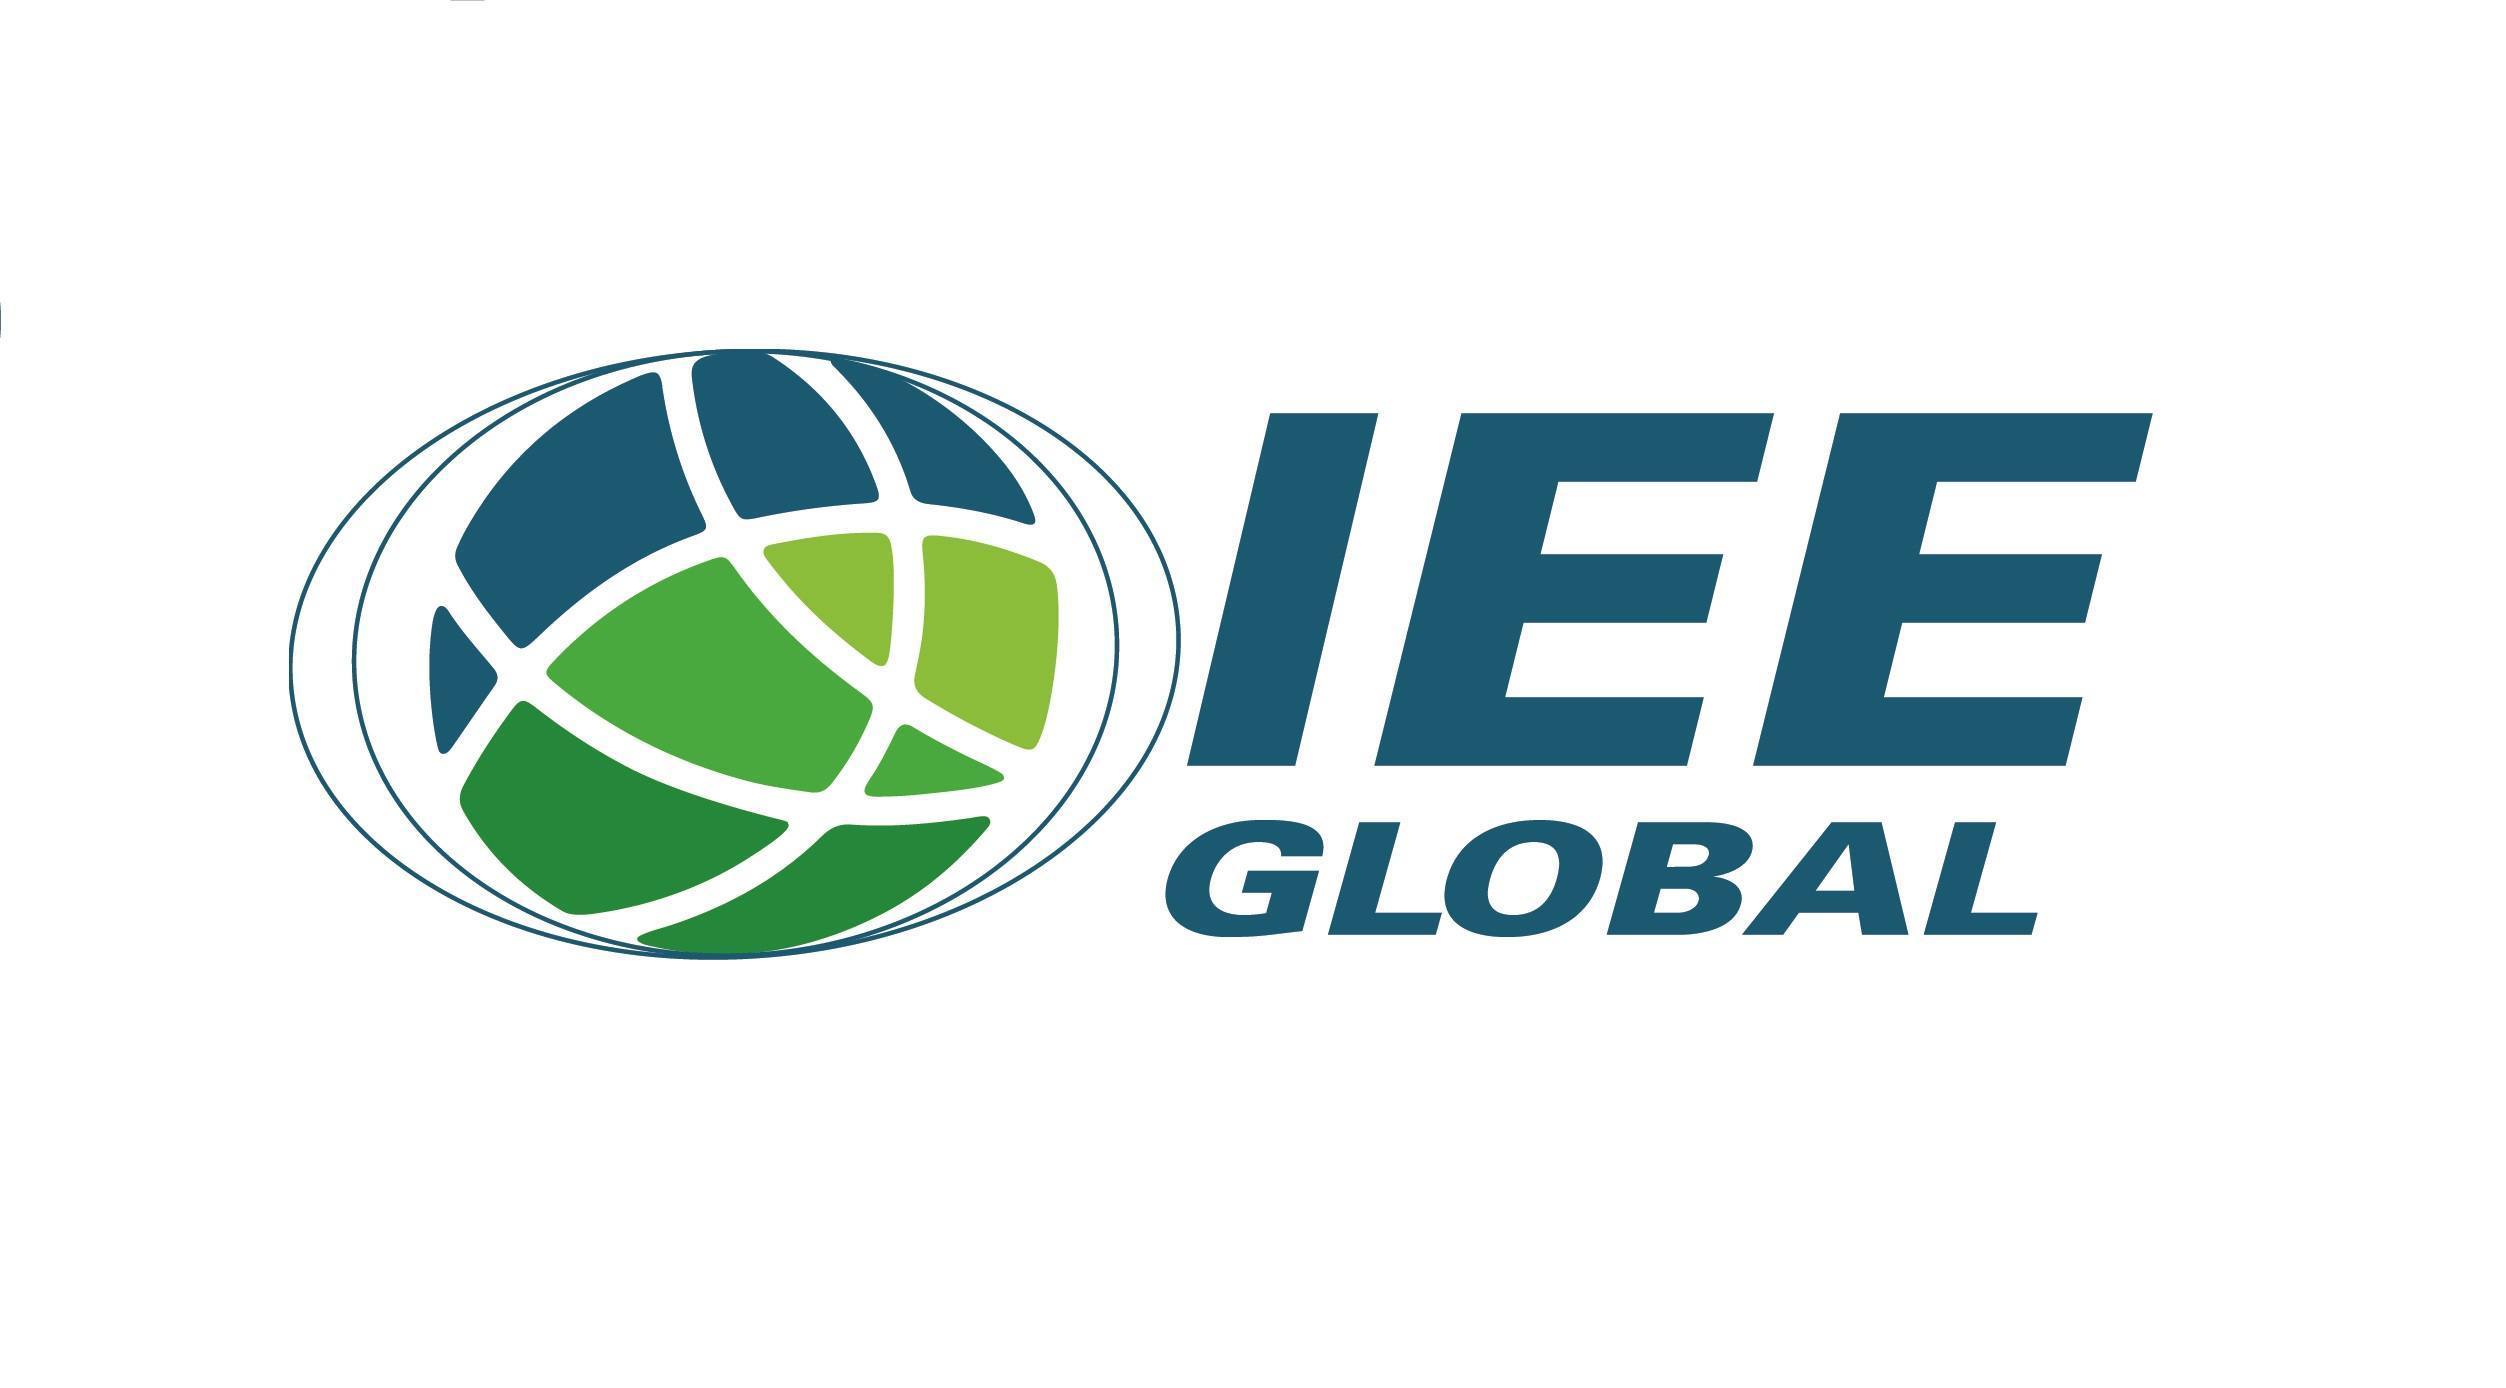 IEE Global logo